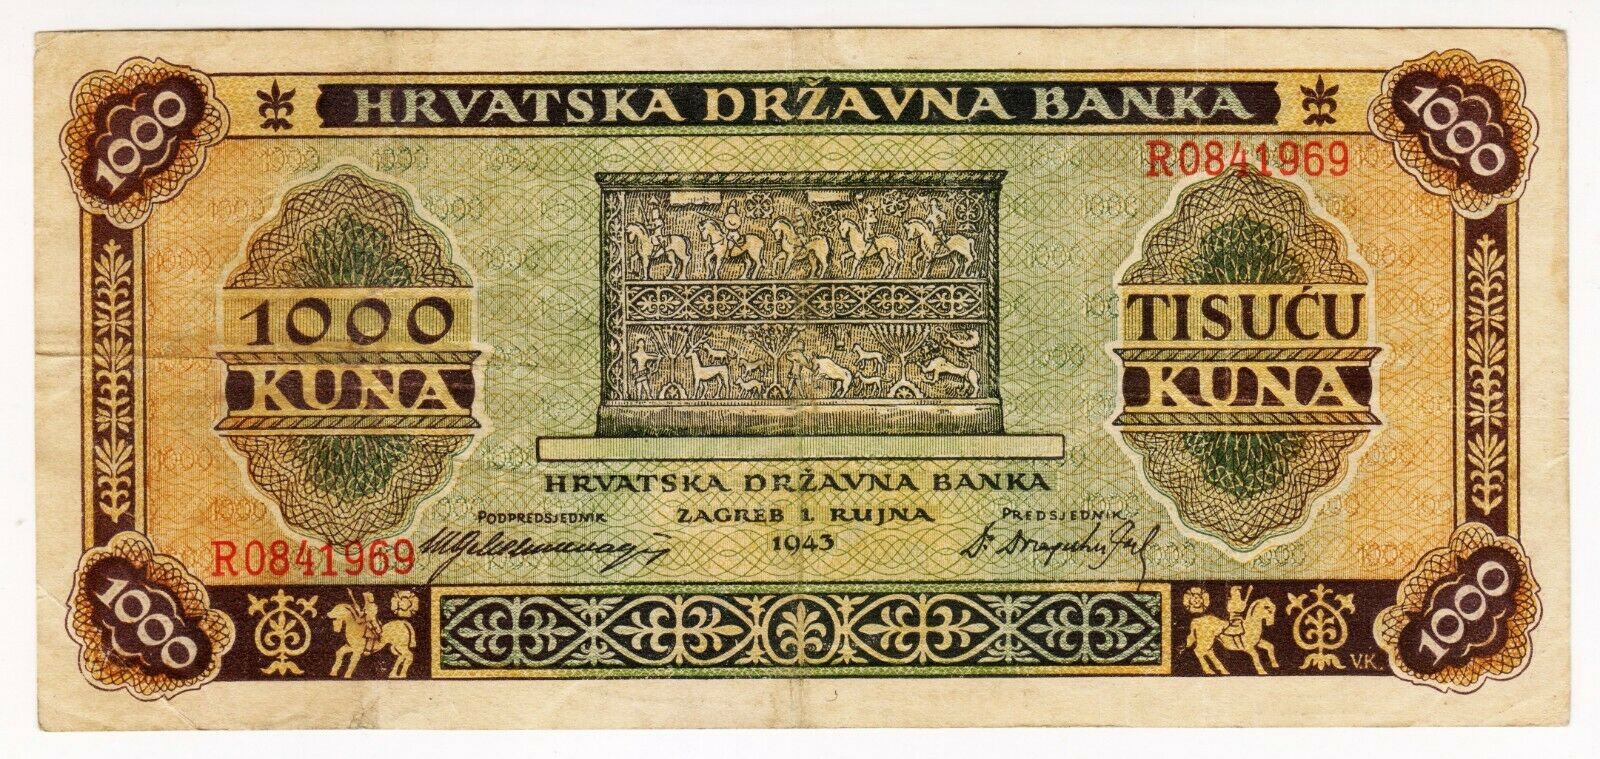 1943 Croatia 1000 Kuna R0841969 Paper Banknote Money Currency